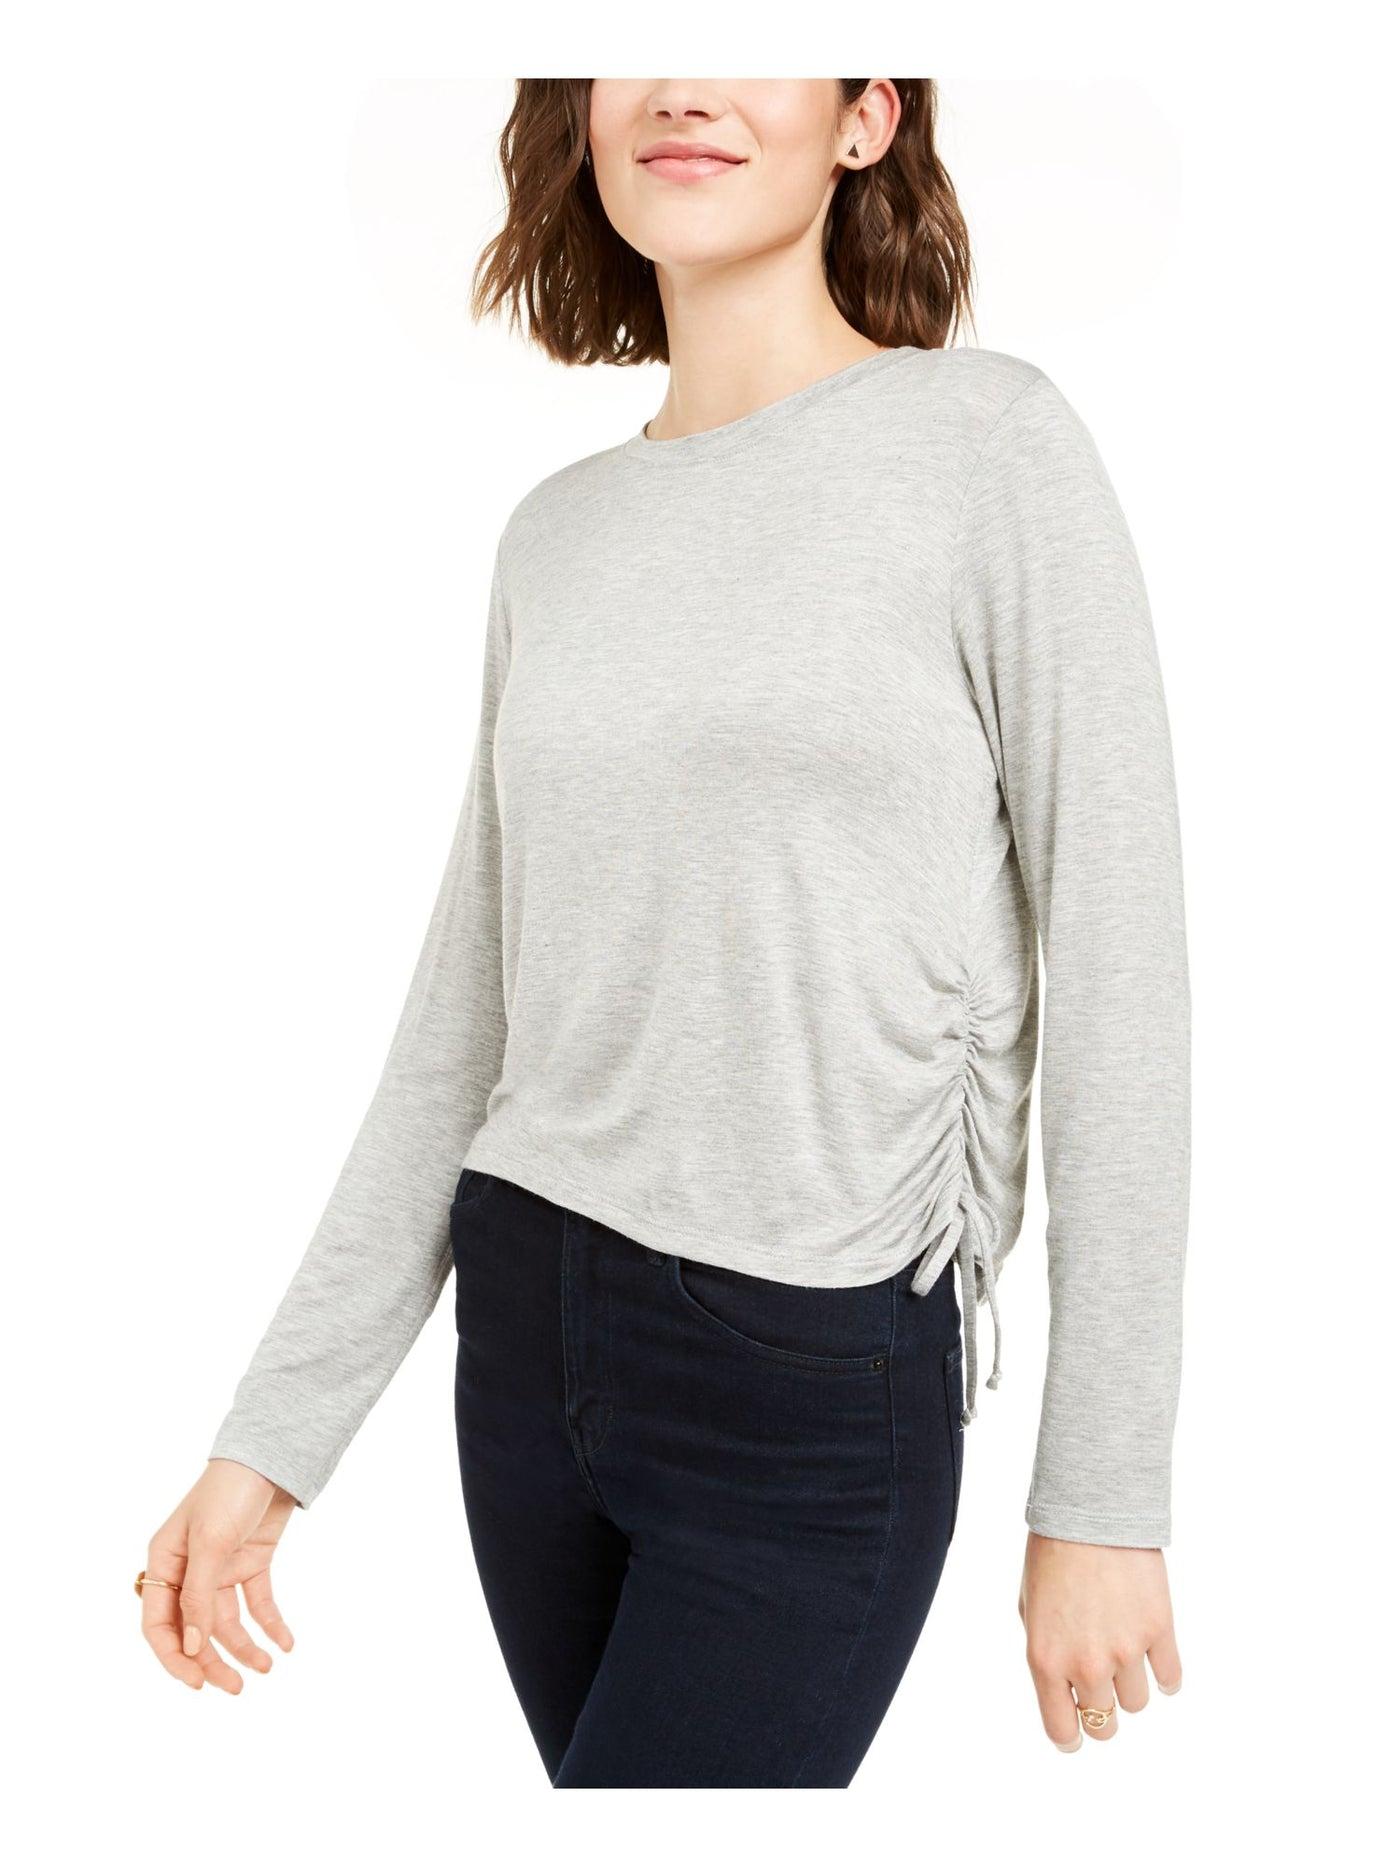 REBELLIOUS ONE Womens White Long Sleeve Jewel Neck Sweater Juniors M